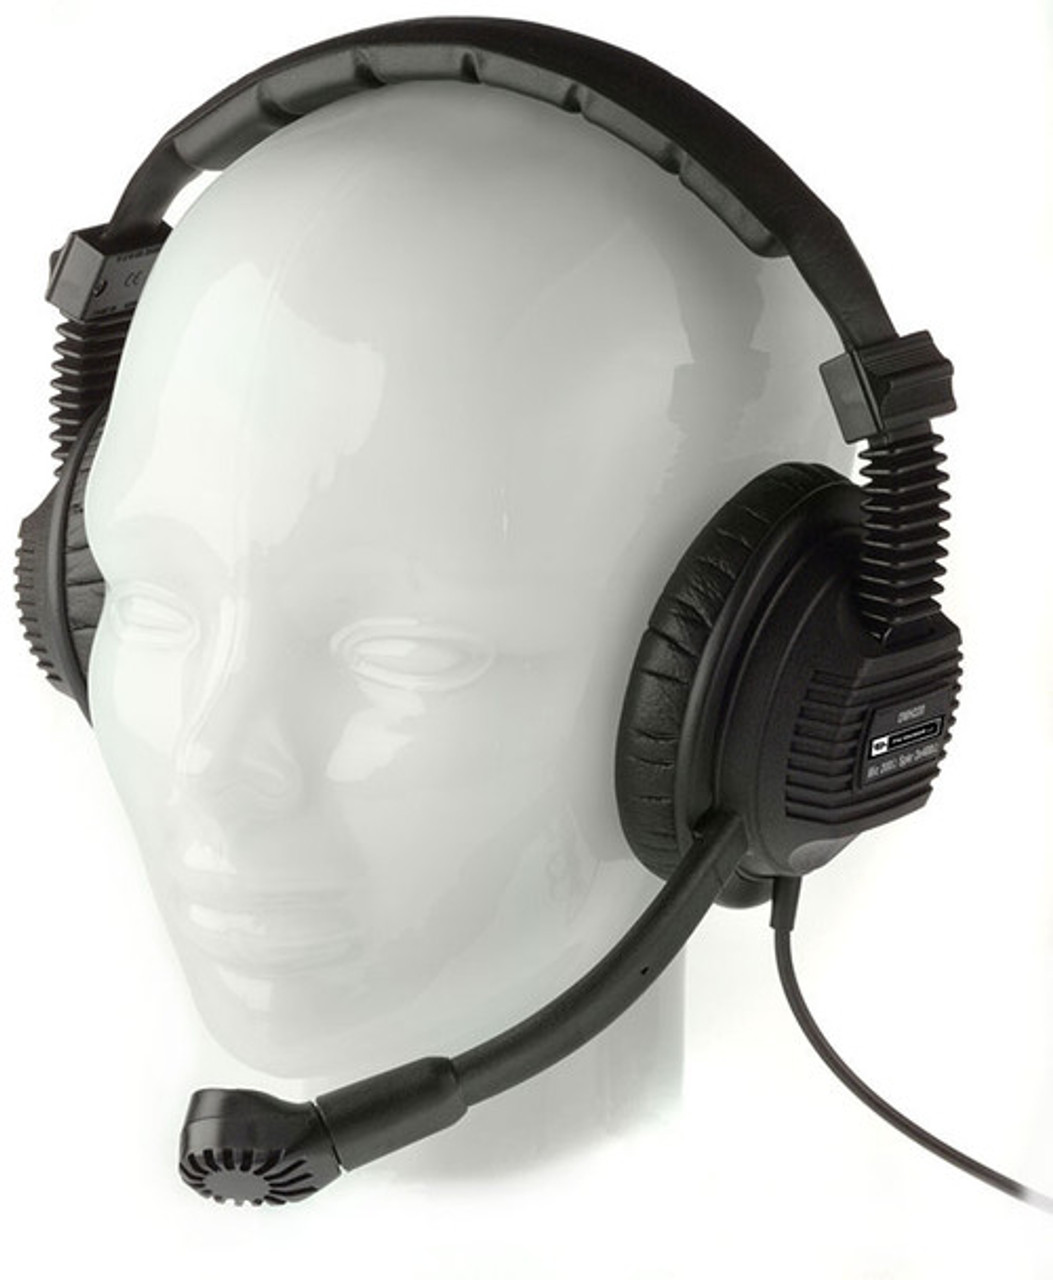 Pro Intercom DMH220 Super-Rugged Double-Ear Intercom Headset (DMH220)